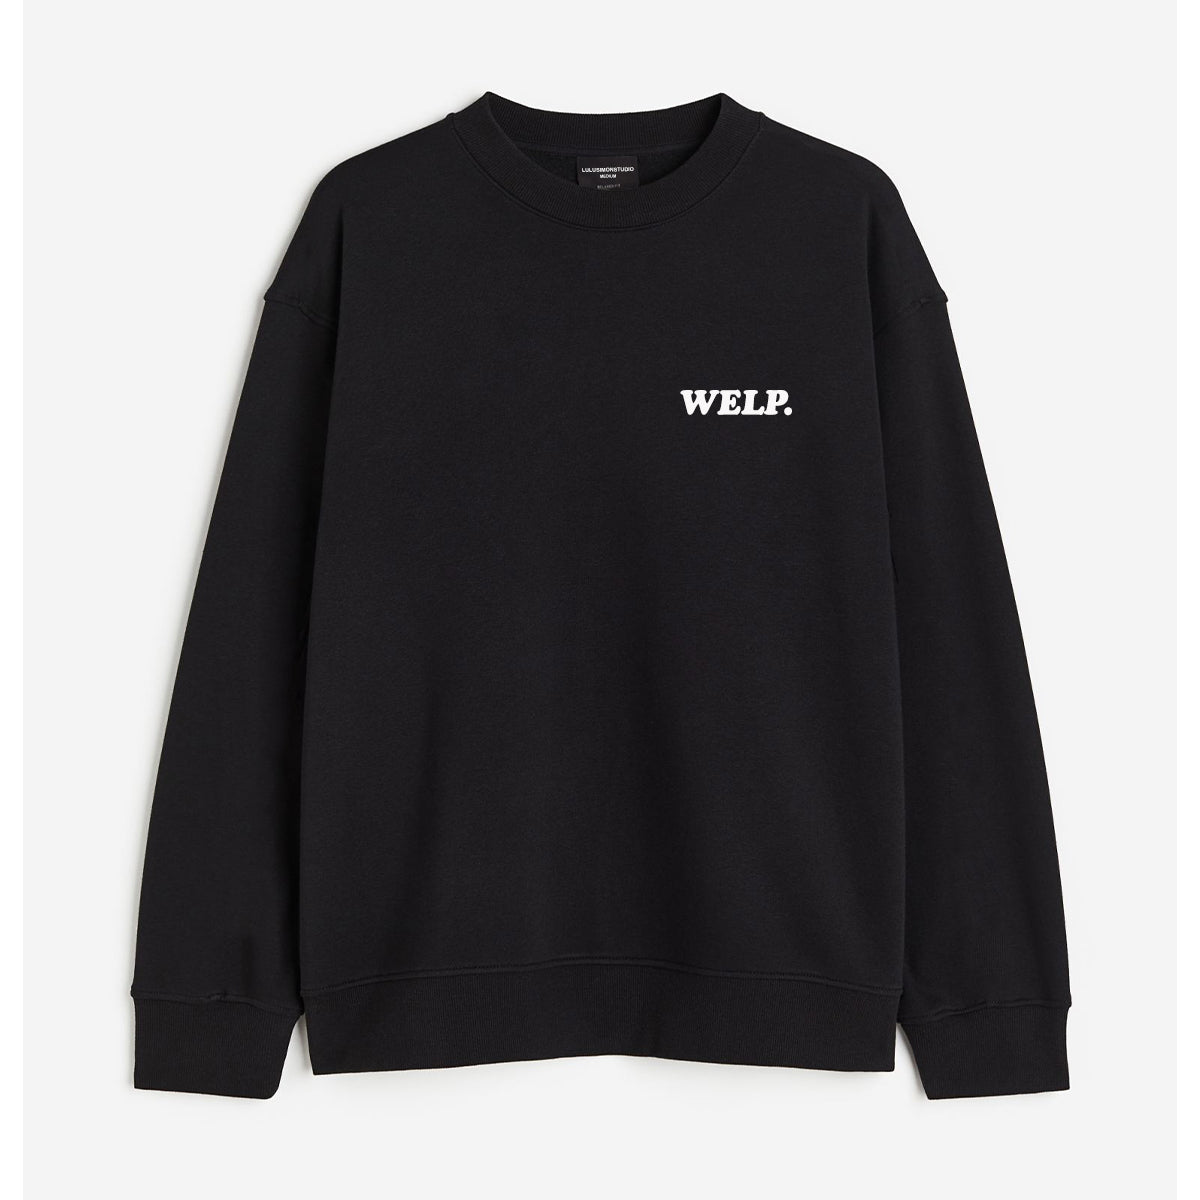 Welp Black Sweatshirt